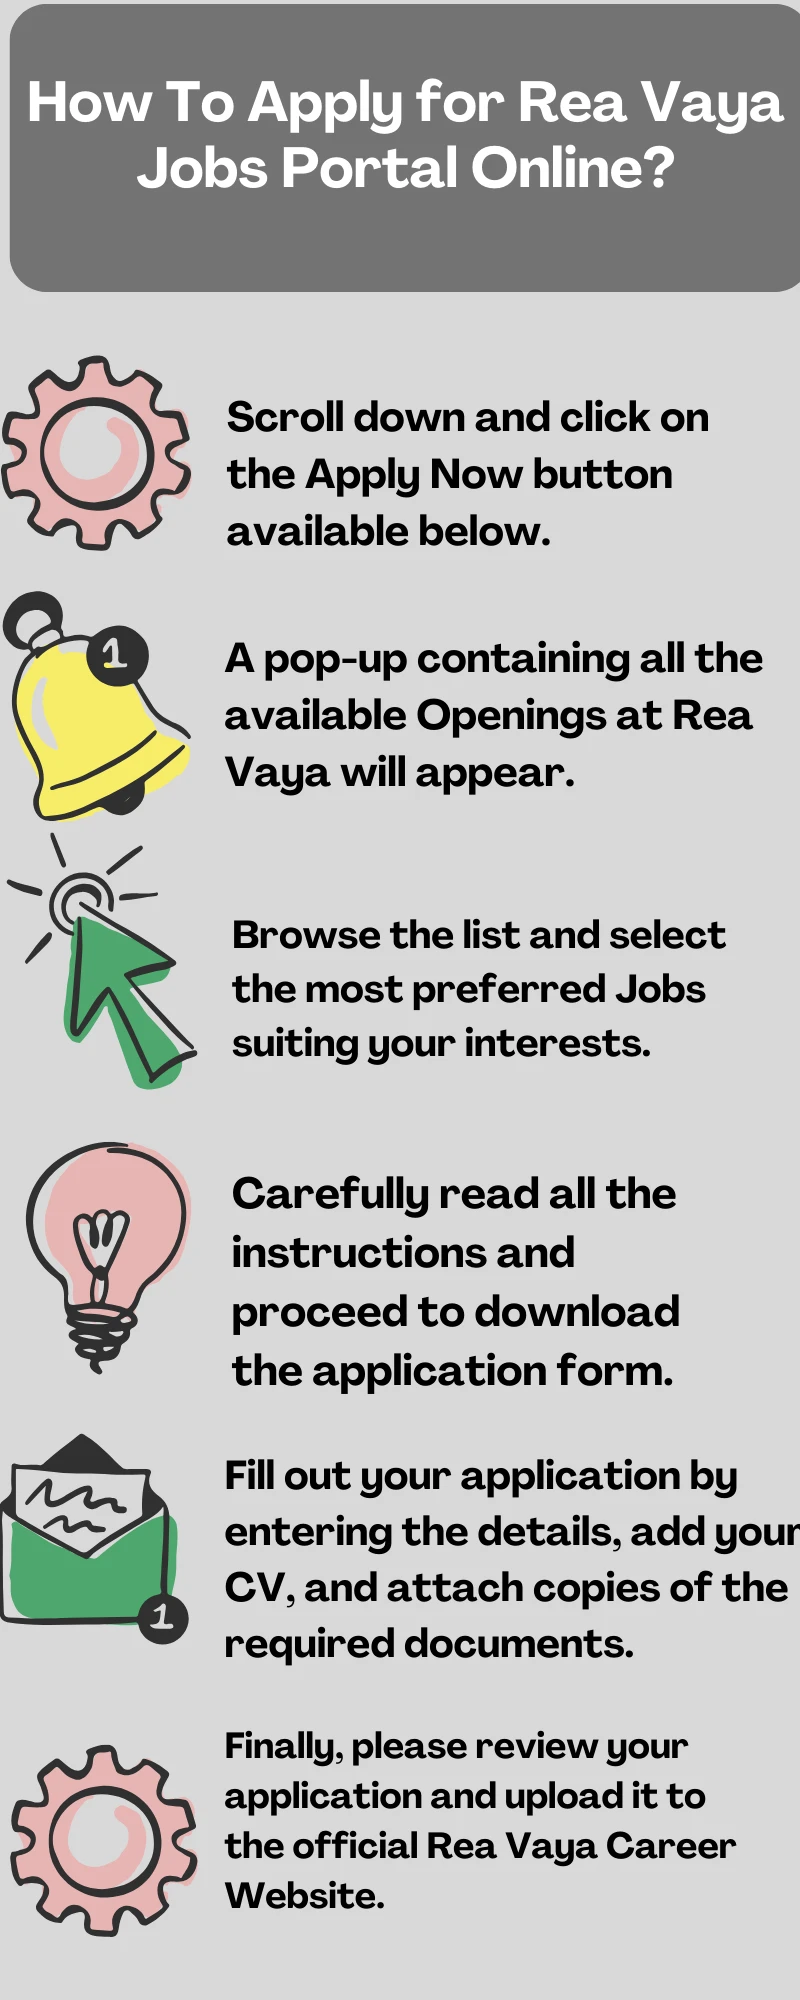 How To Apply for Rea Vaya Jobs Portal Online?